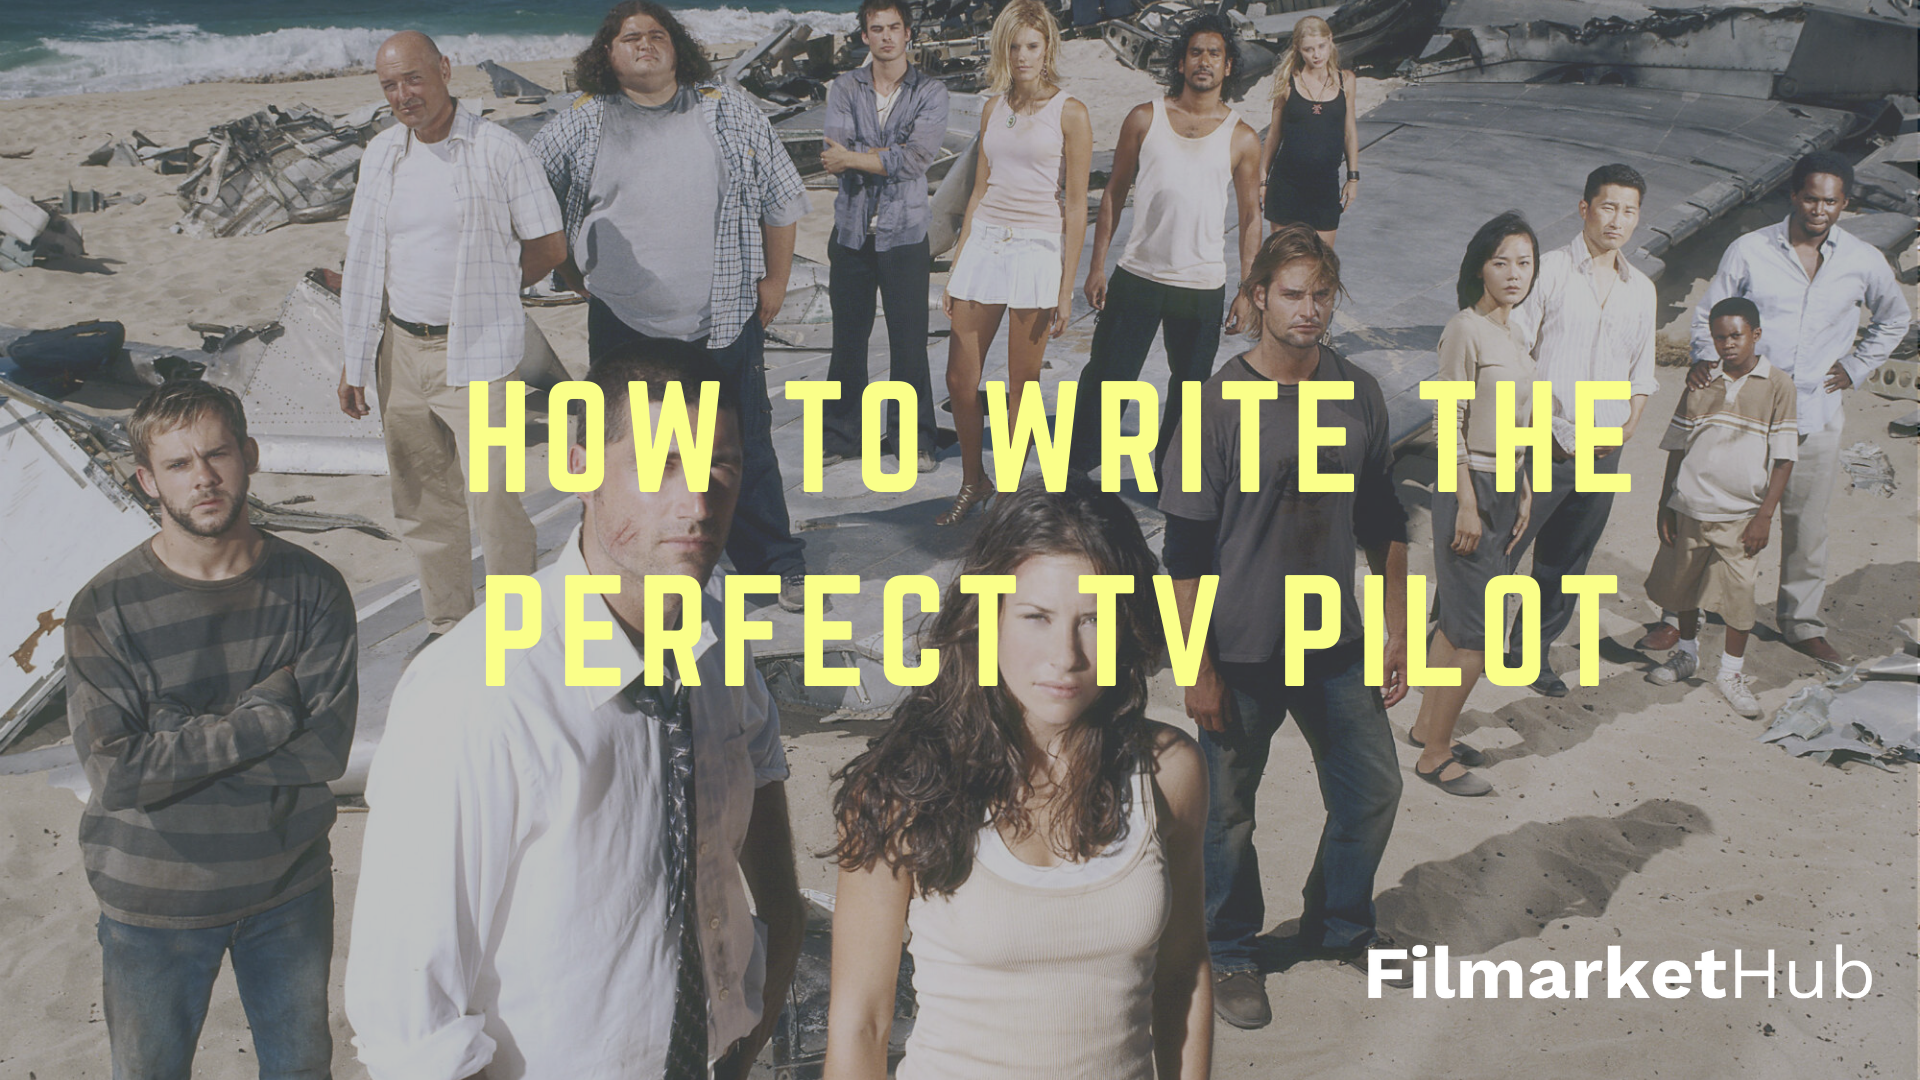 HOW TO WRITE THE PERFECT TV PILOT  by Filmarket Hub  Filmarket